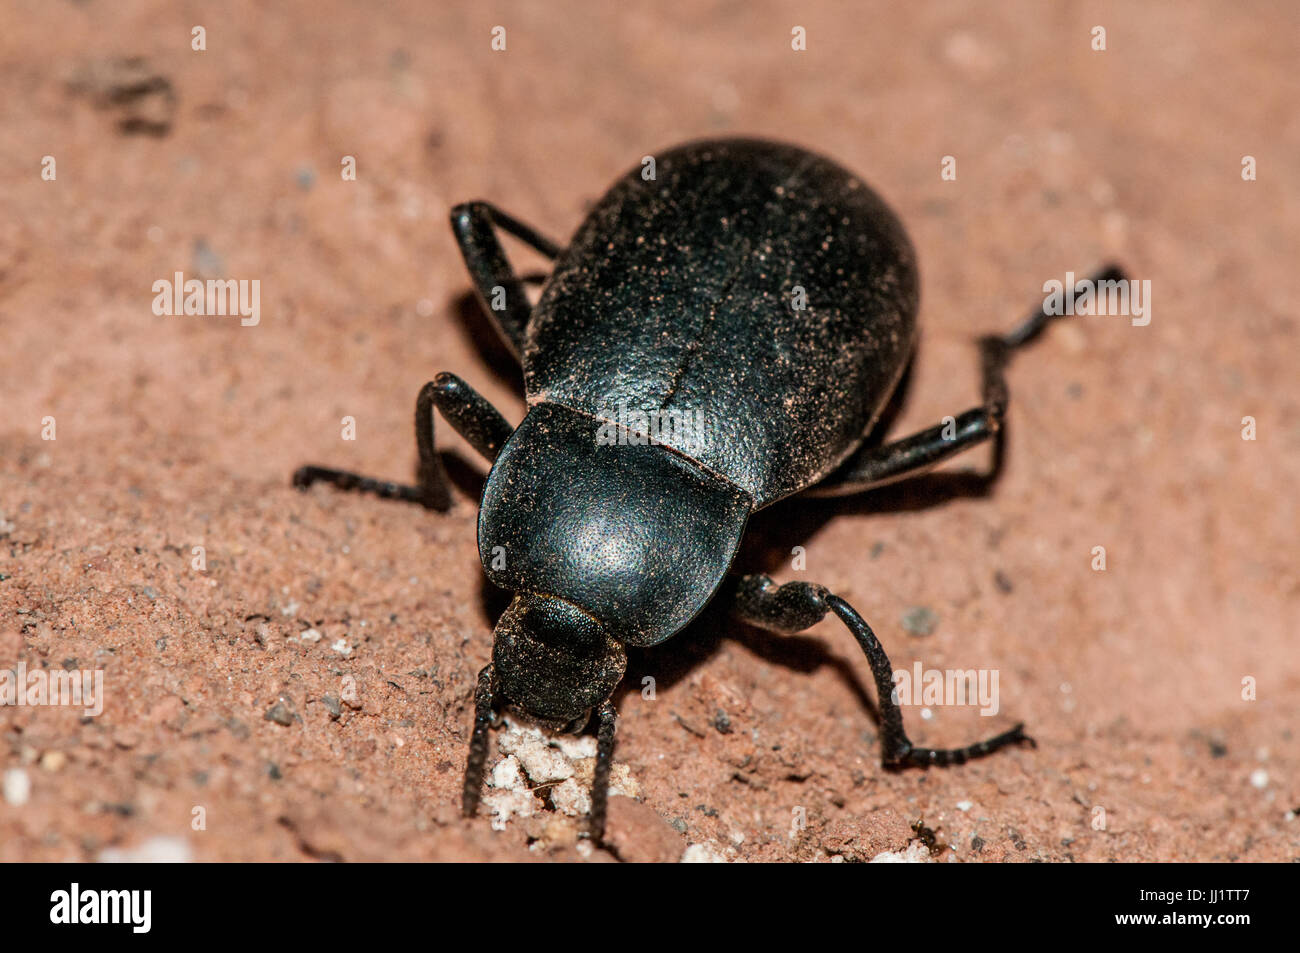 Beetle (blaps mucronata) eating on a clay soil Stock Photo